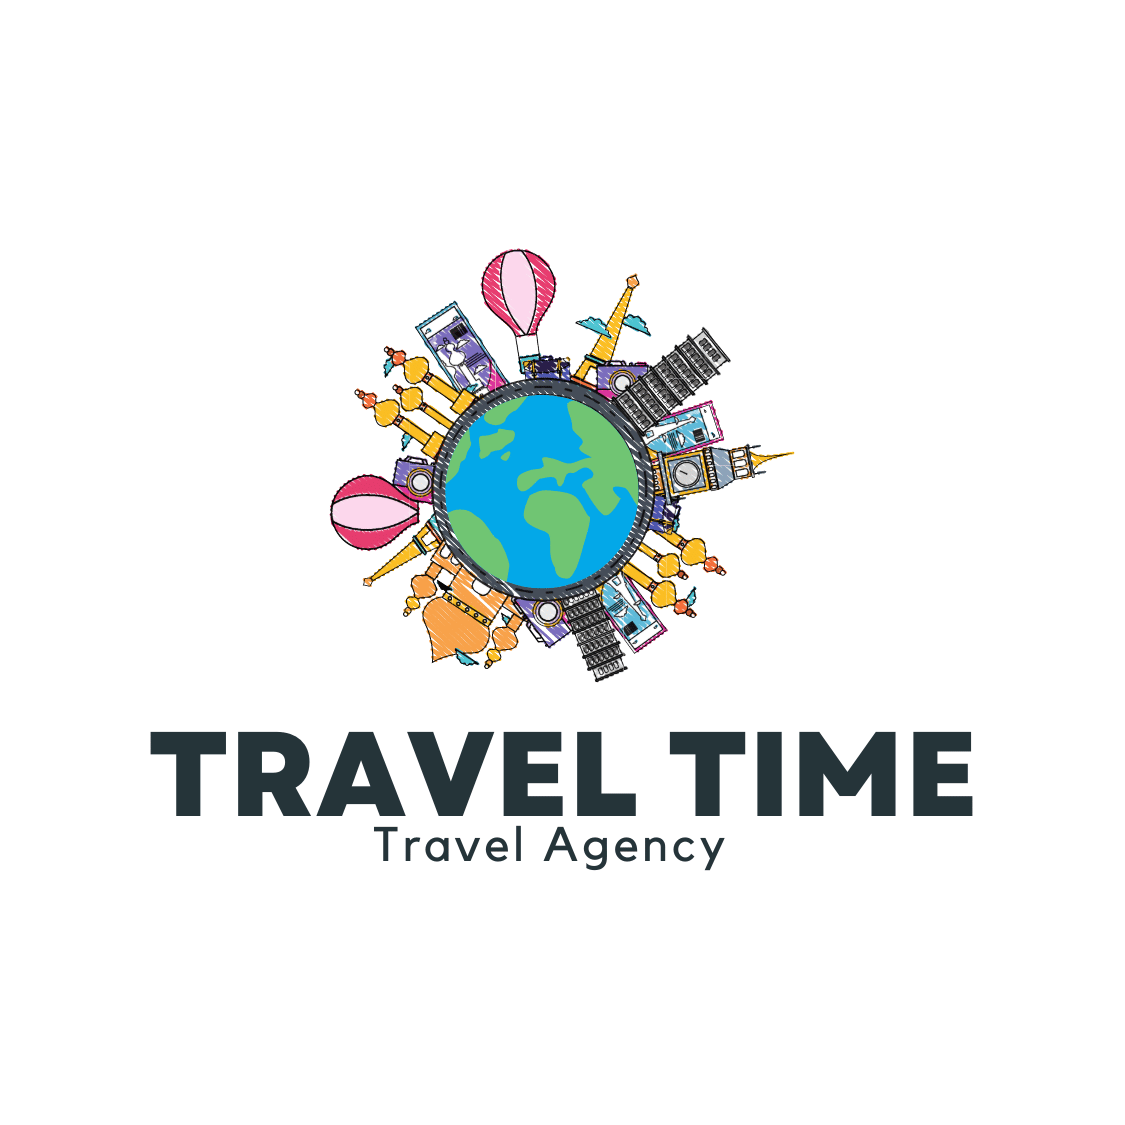 5 Travel Agency Logos Bundle preview image.